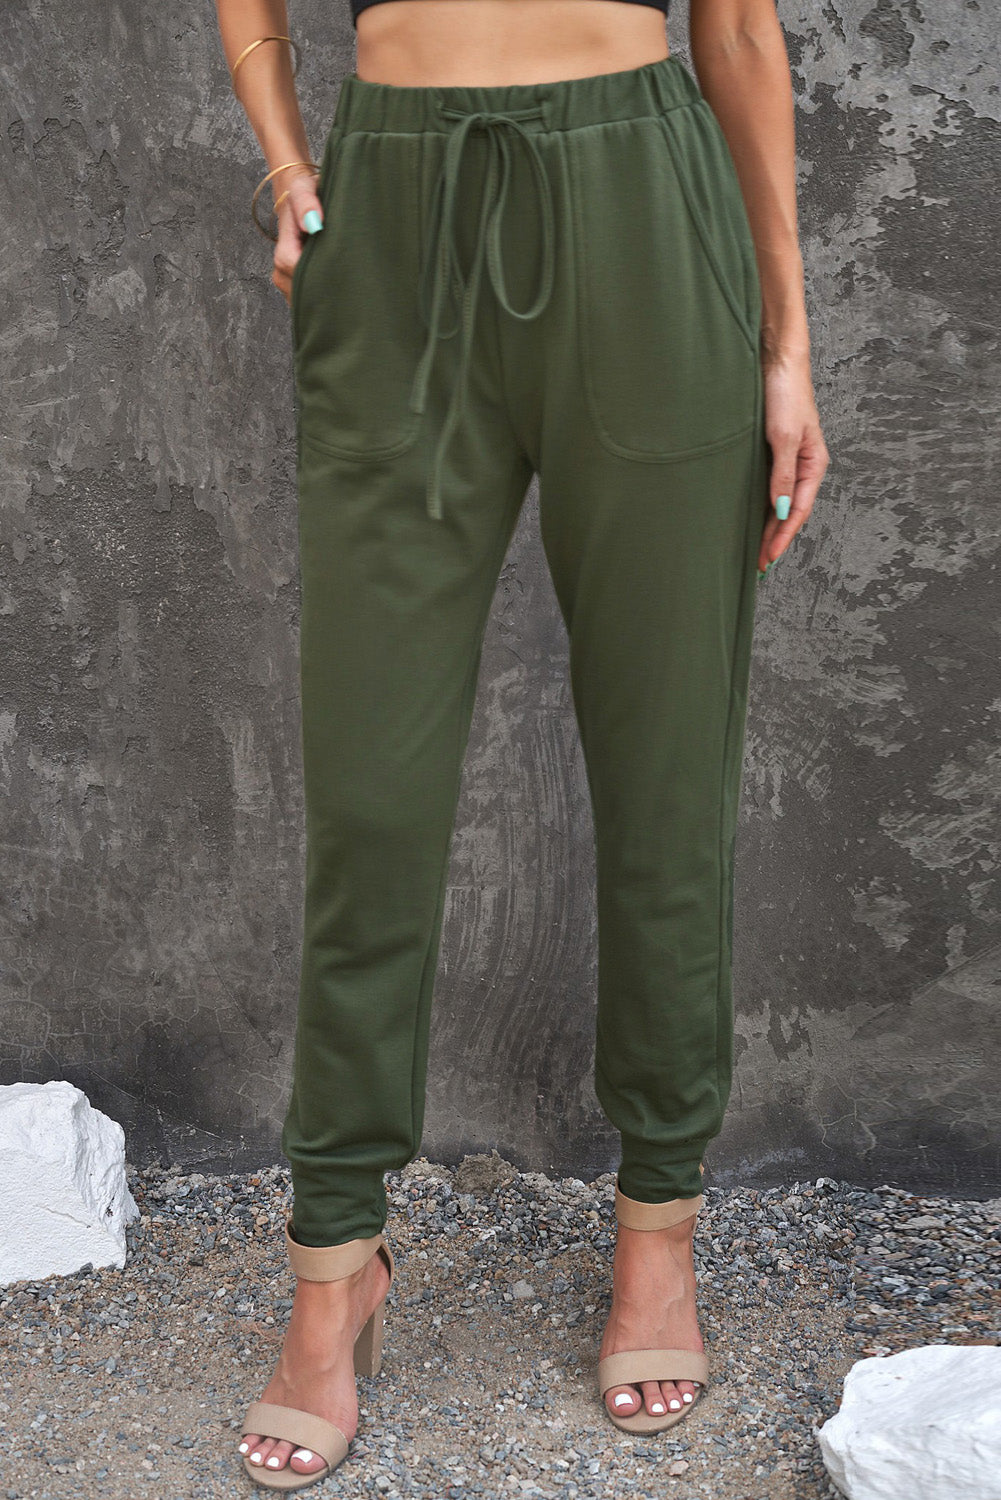 Womens Army Green Pocketed Drawstring Casual Pants